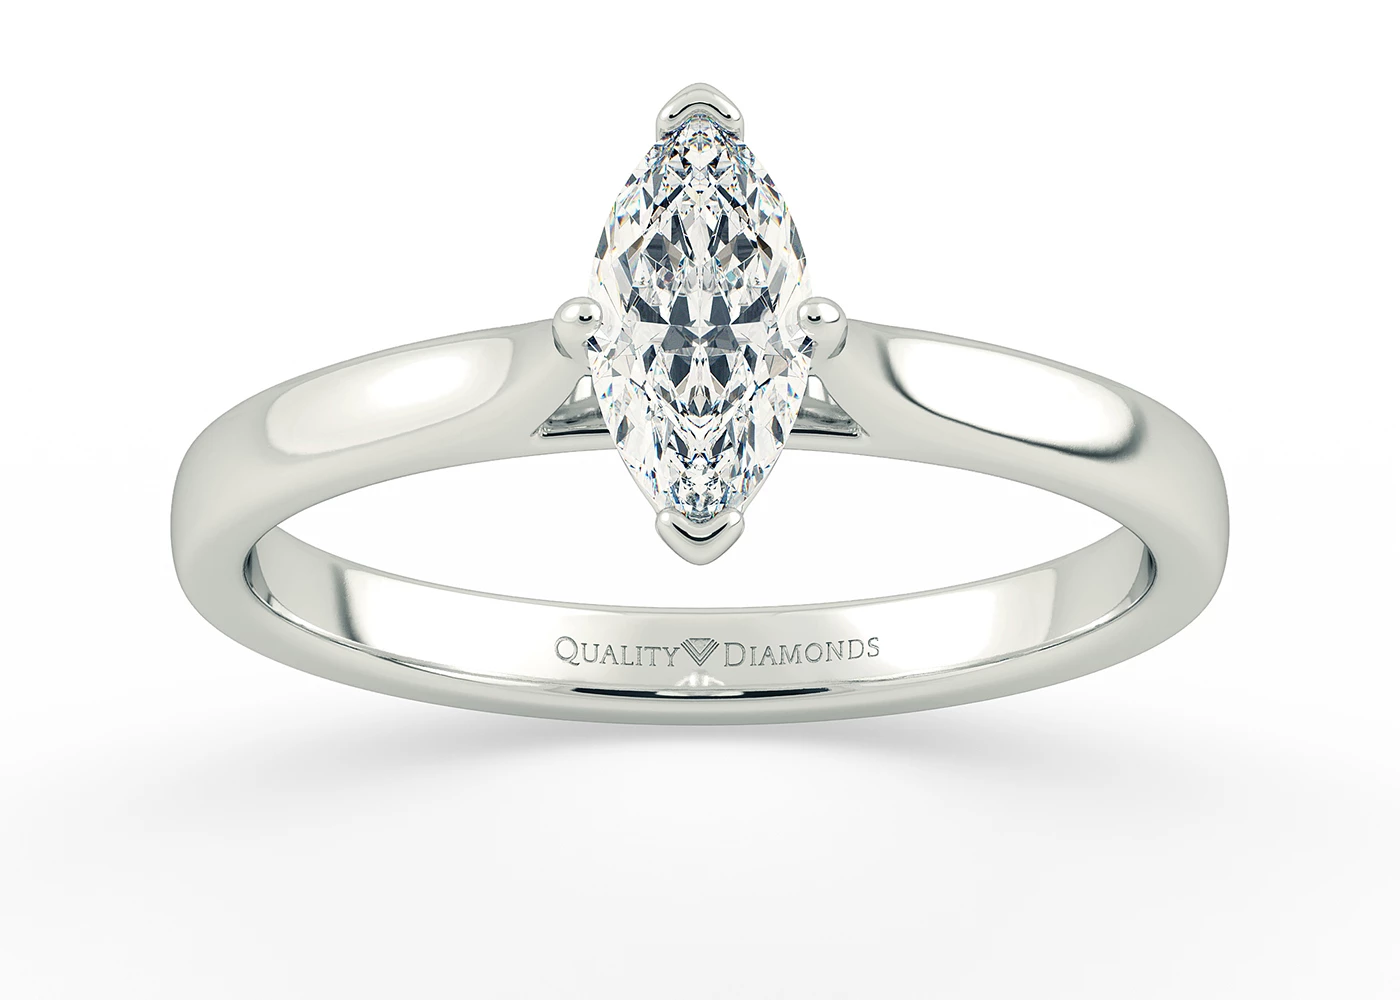 Marquise Clara Diamond Ring in 9K White Gold